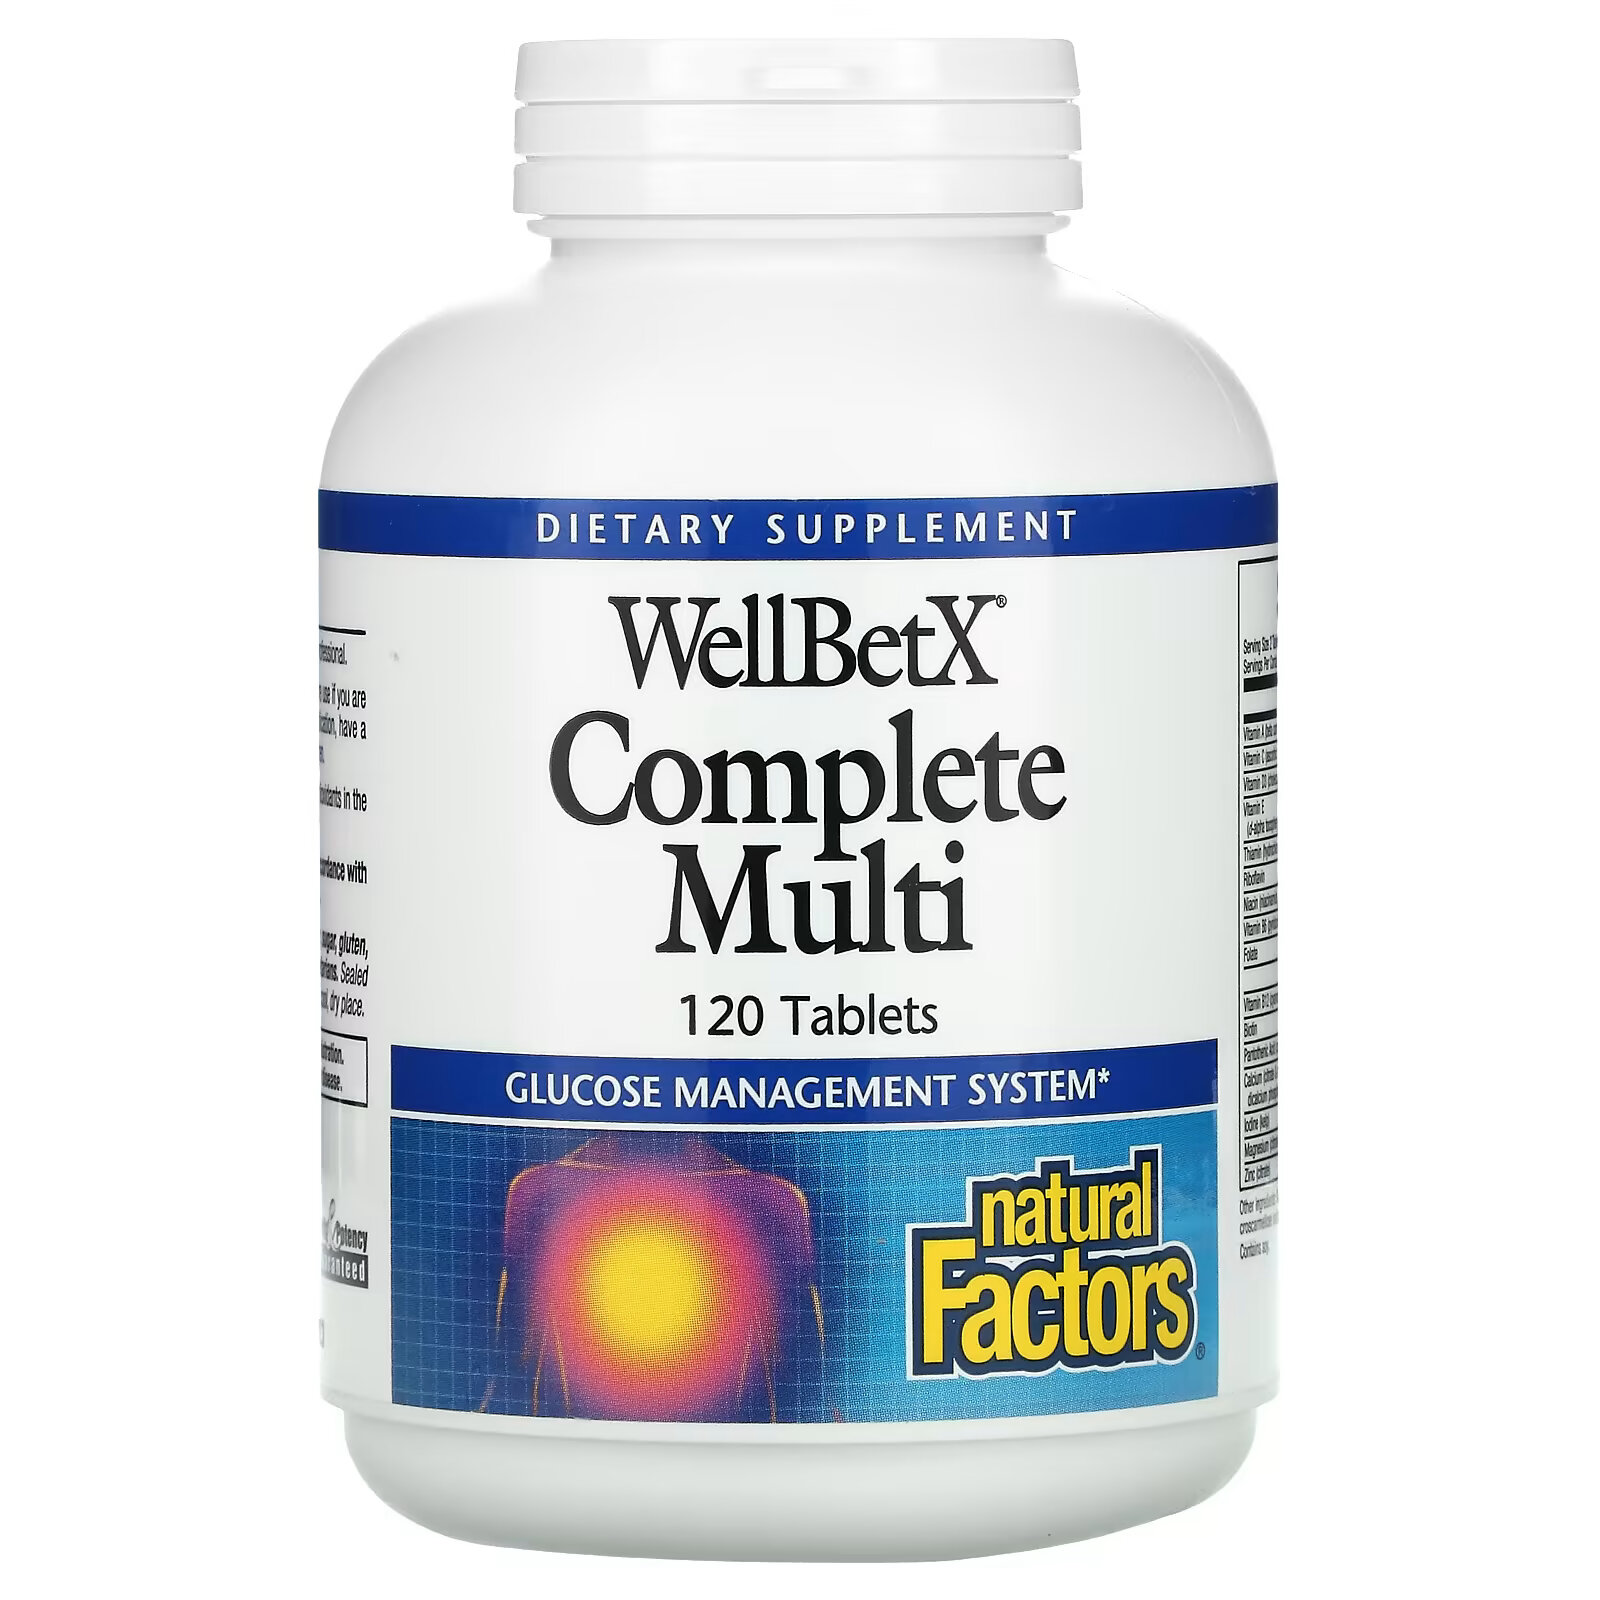 natural factors men s multistart ежедневные витамины для мужчин 120 таблеток Natural Factors, WellBetX Complete Multi, 120 таблеток